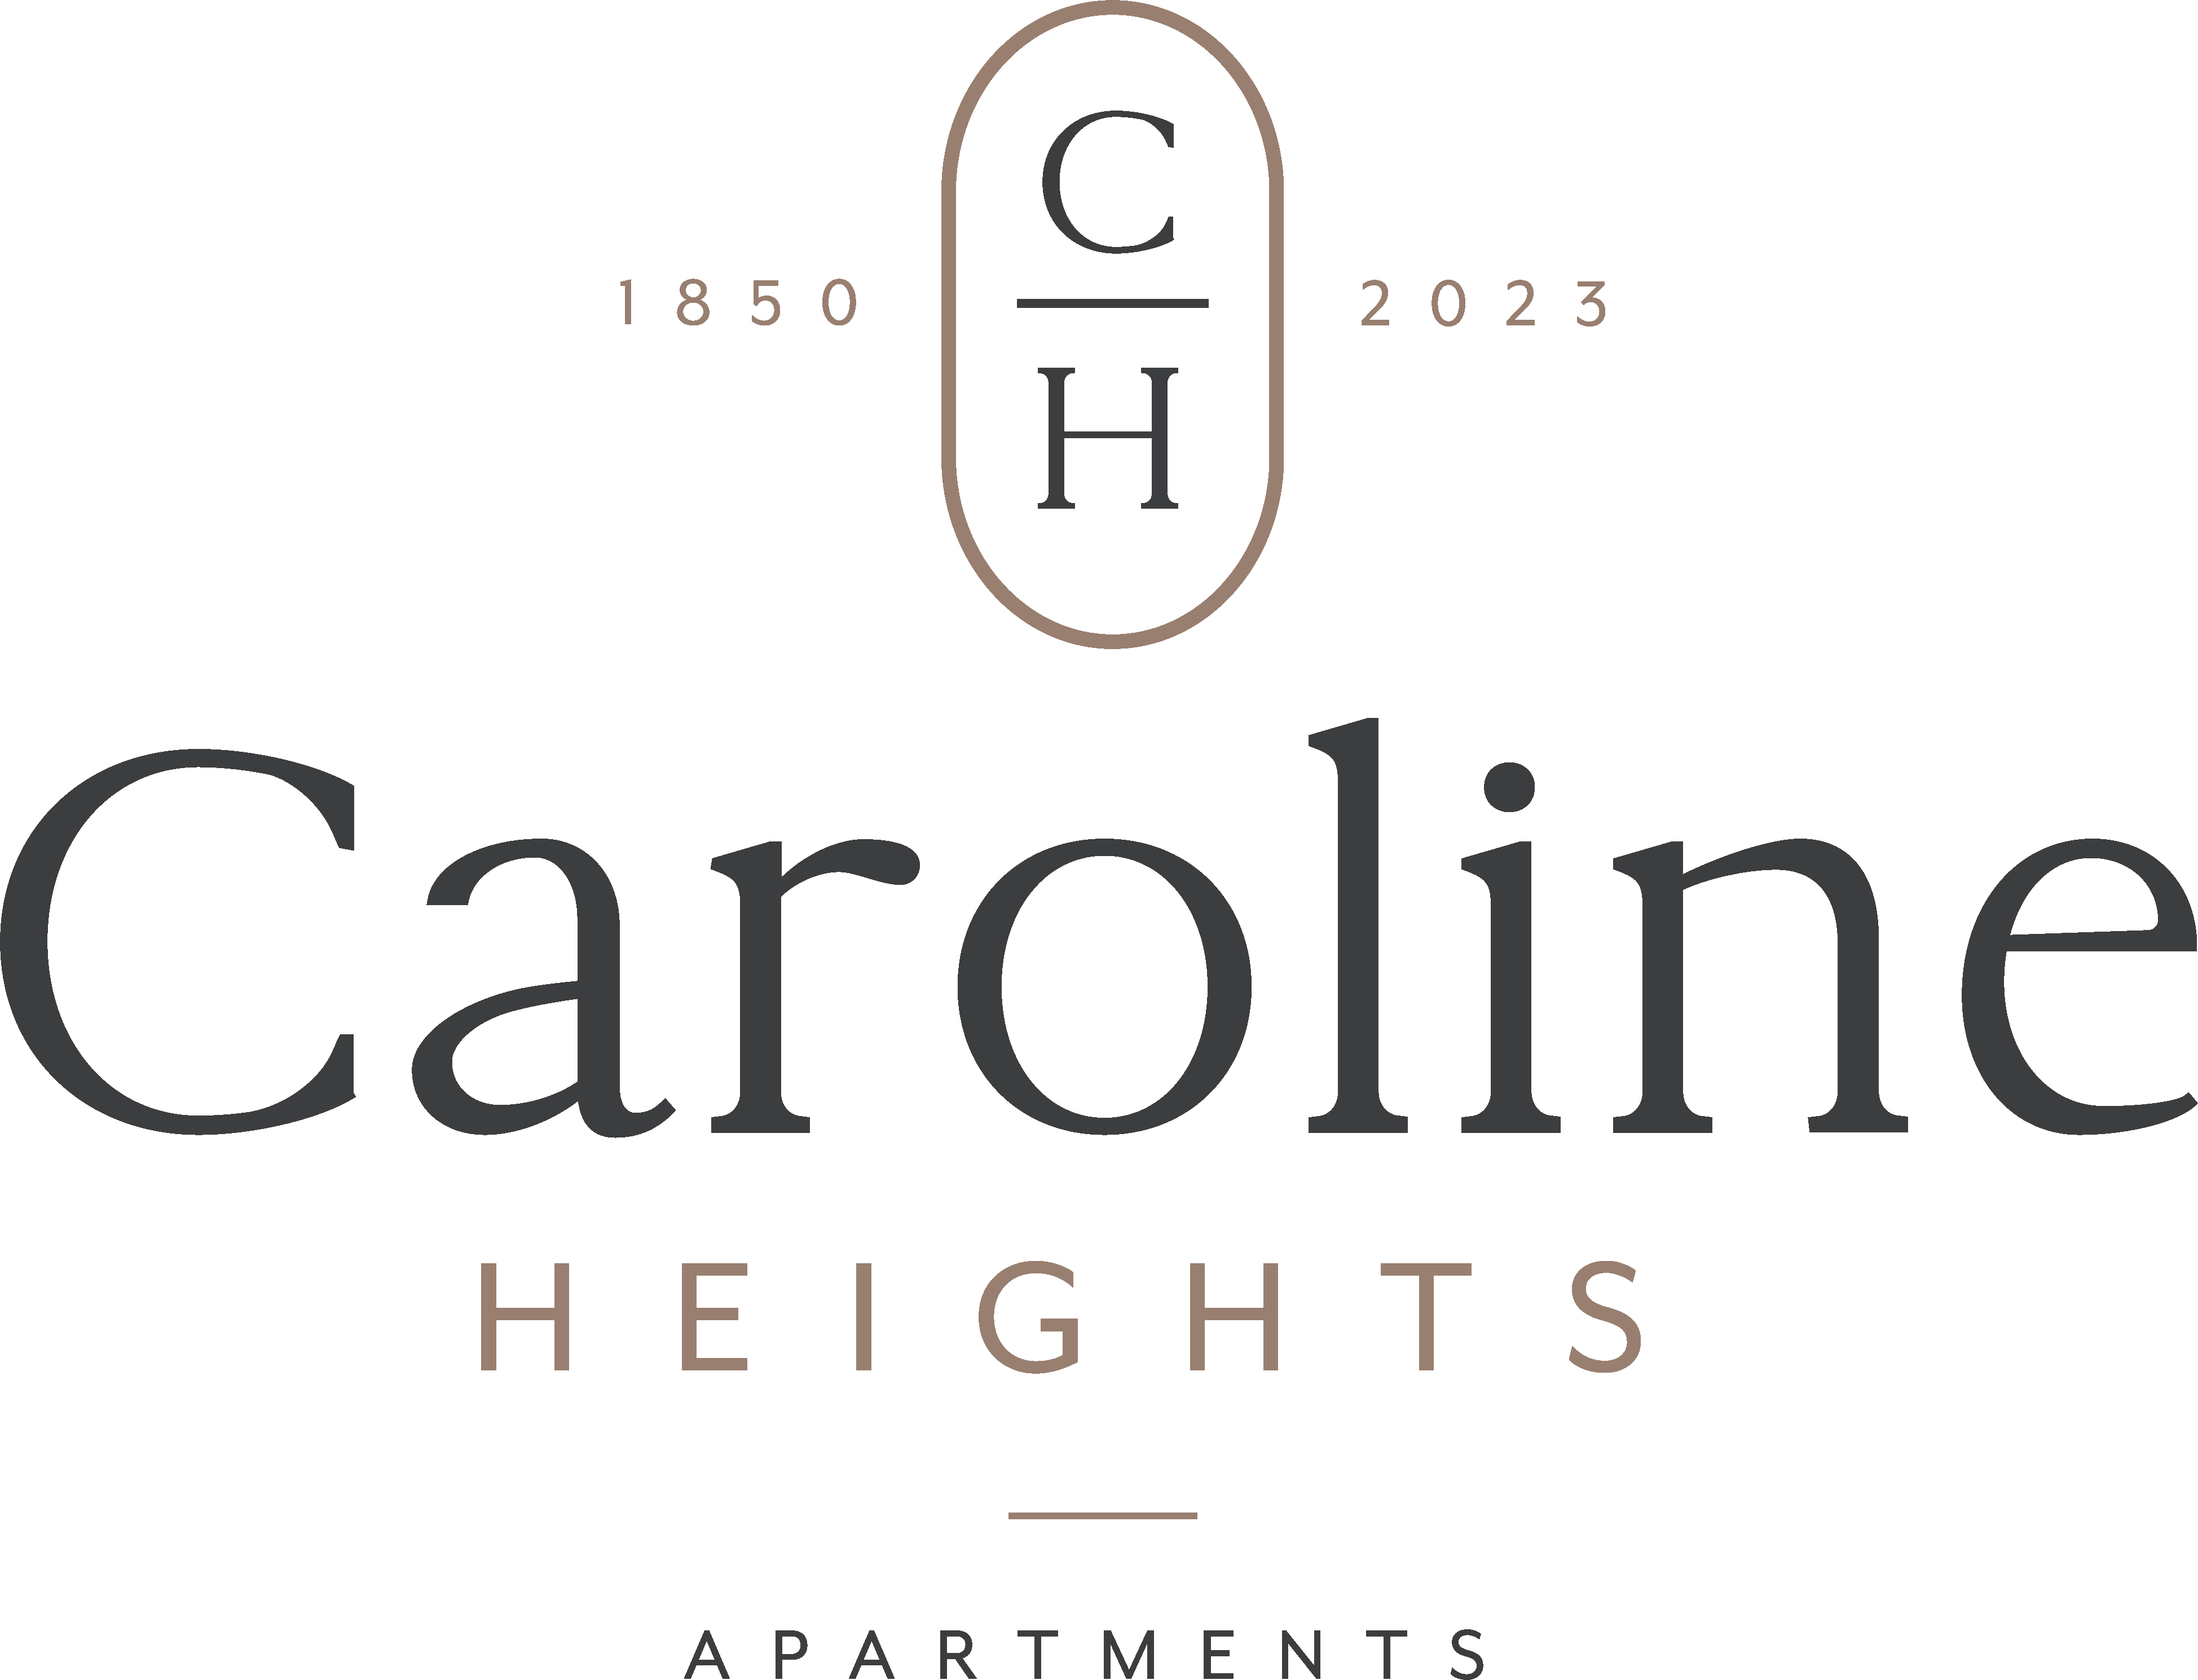 Caroline Heights logo